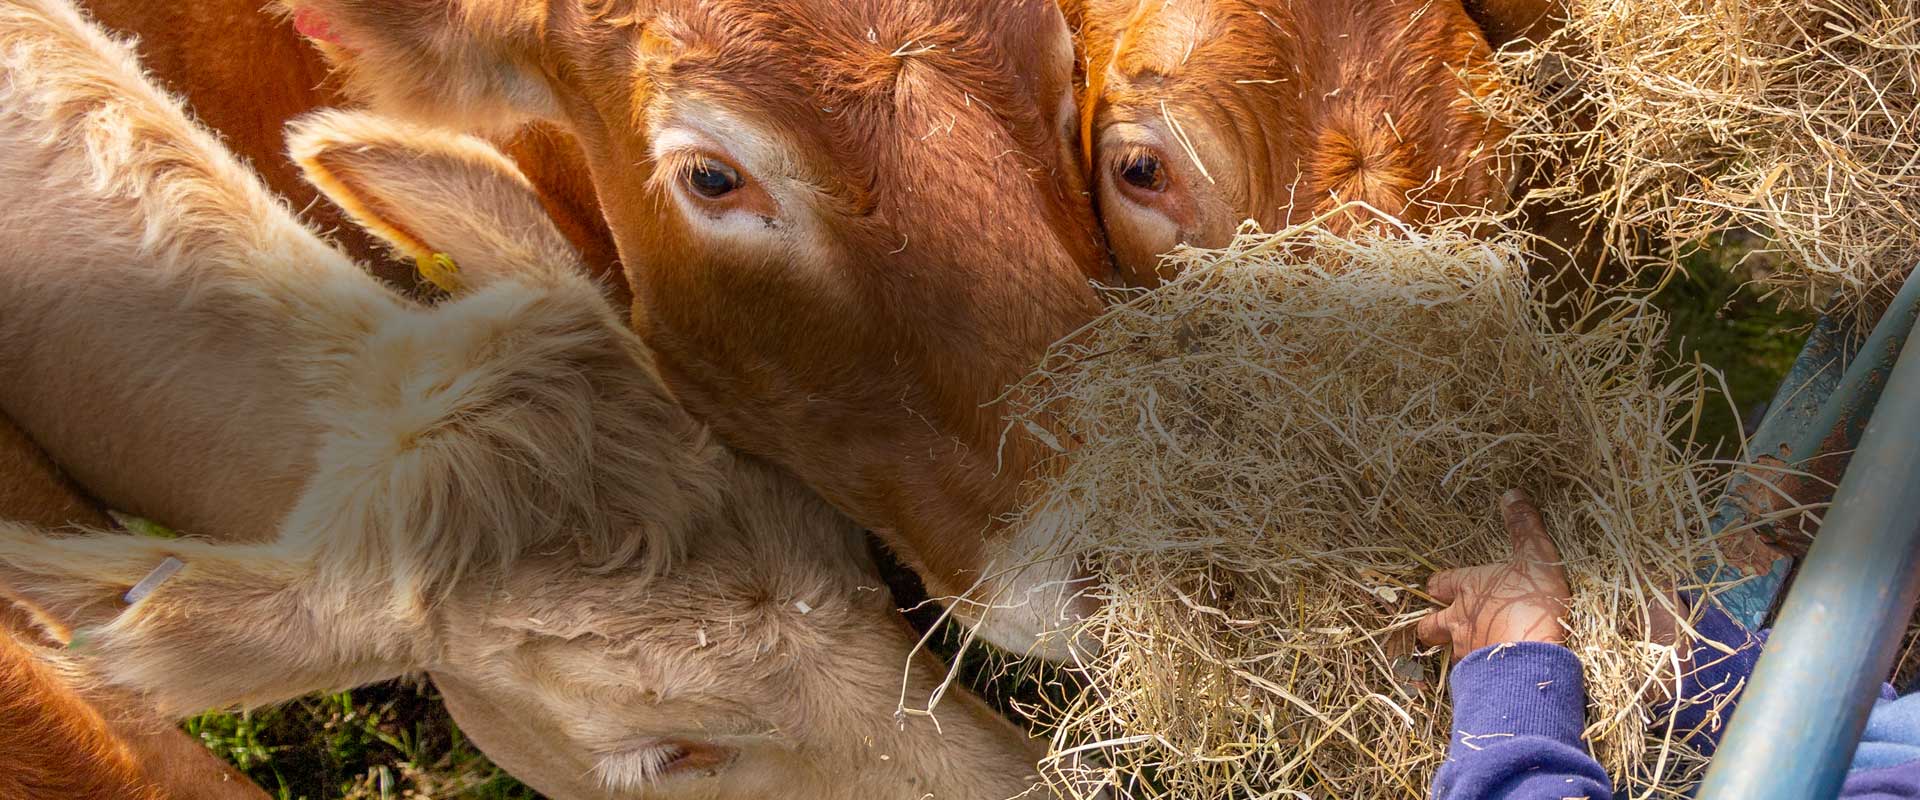 Ruminant Health & Welfare Limosin Cattle eating hay